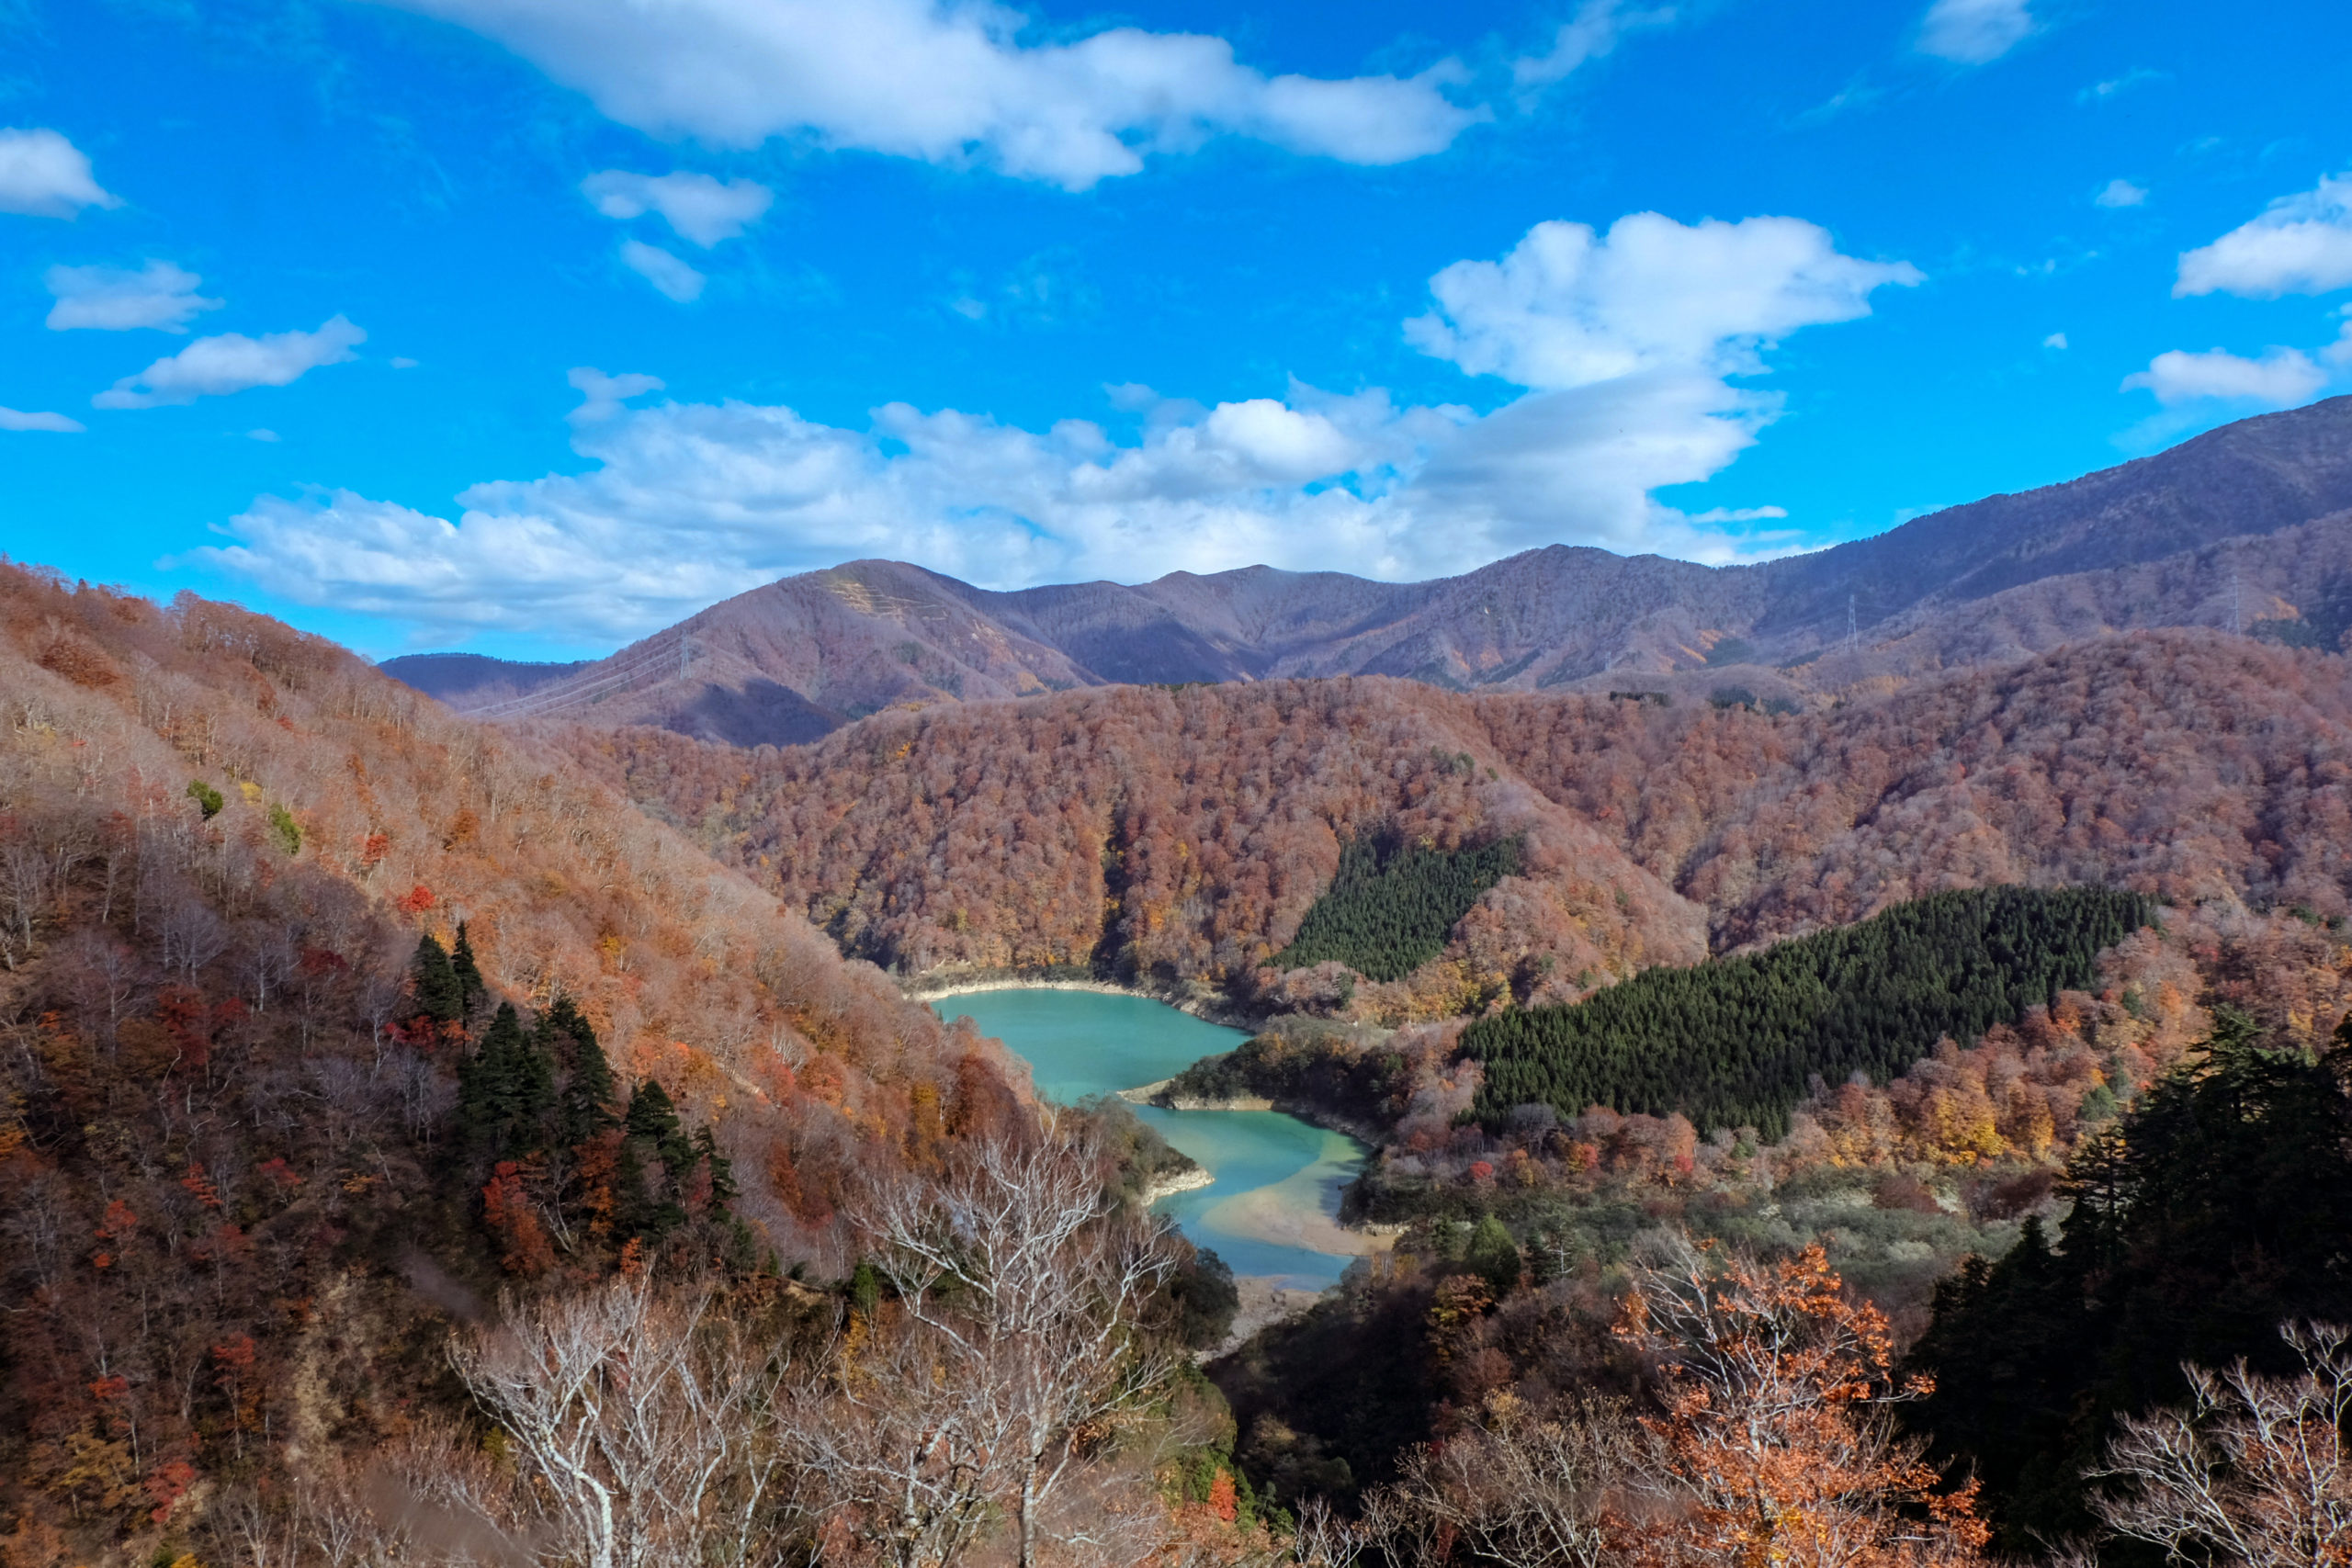 The view of Kiyotsu River from the Dragondola. Photo by Wanmai Nonthitipong.